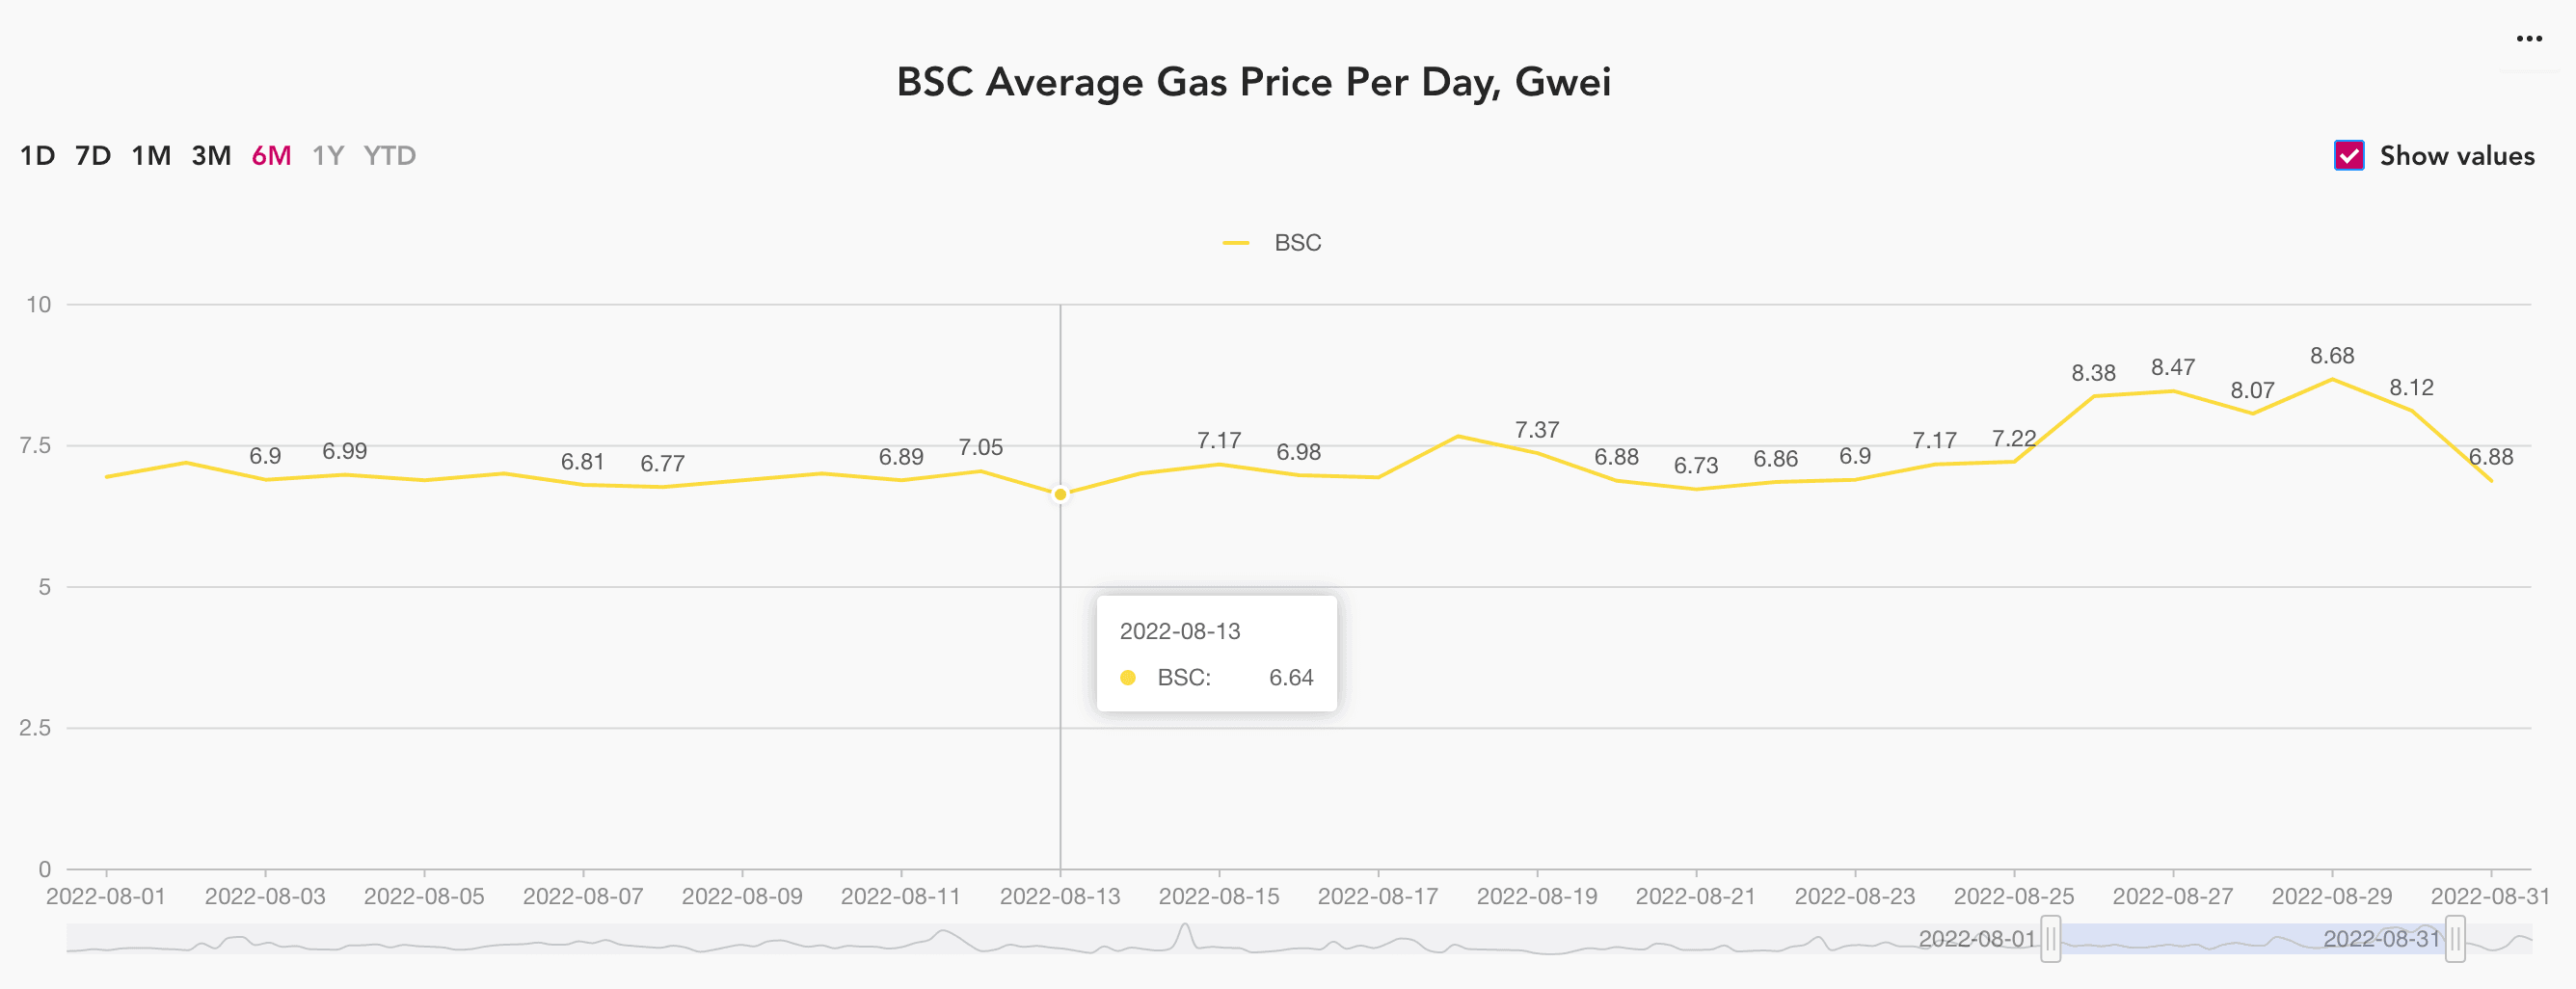 BSC average gas price per day 